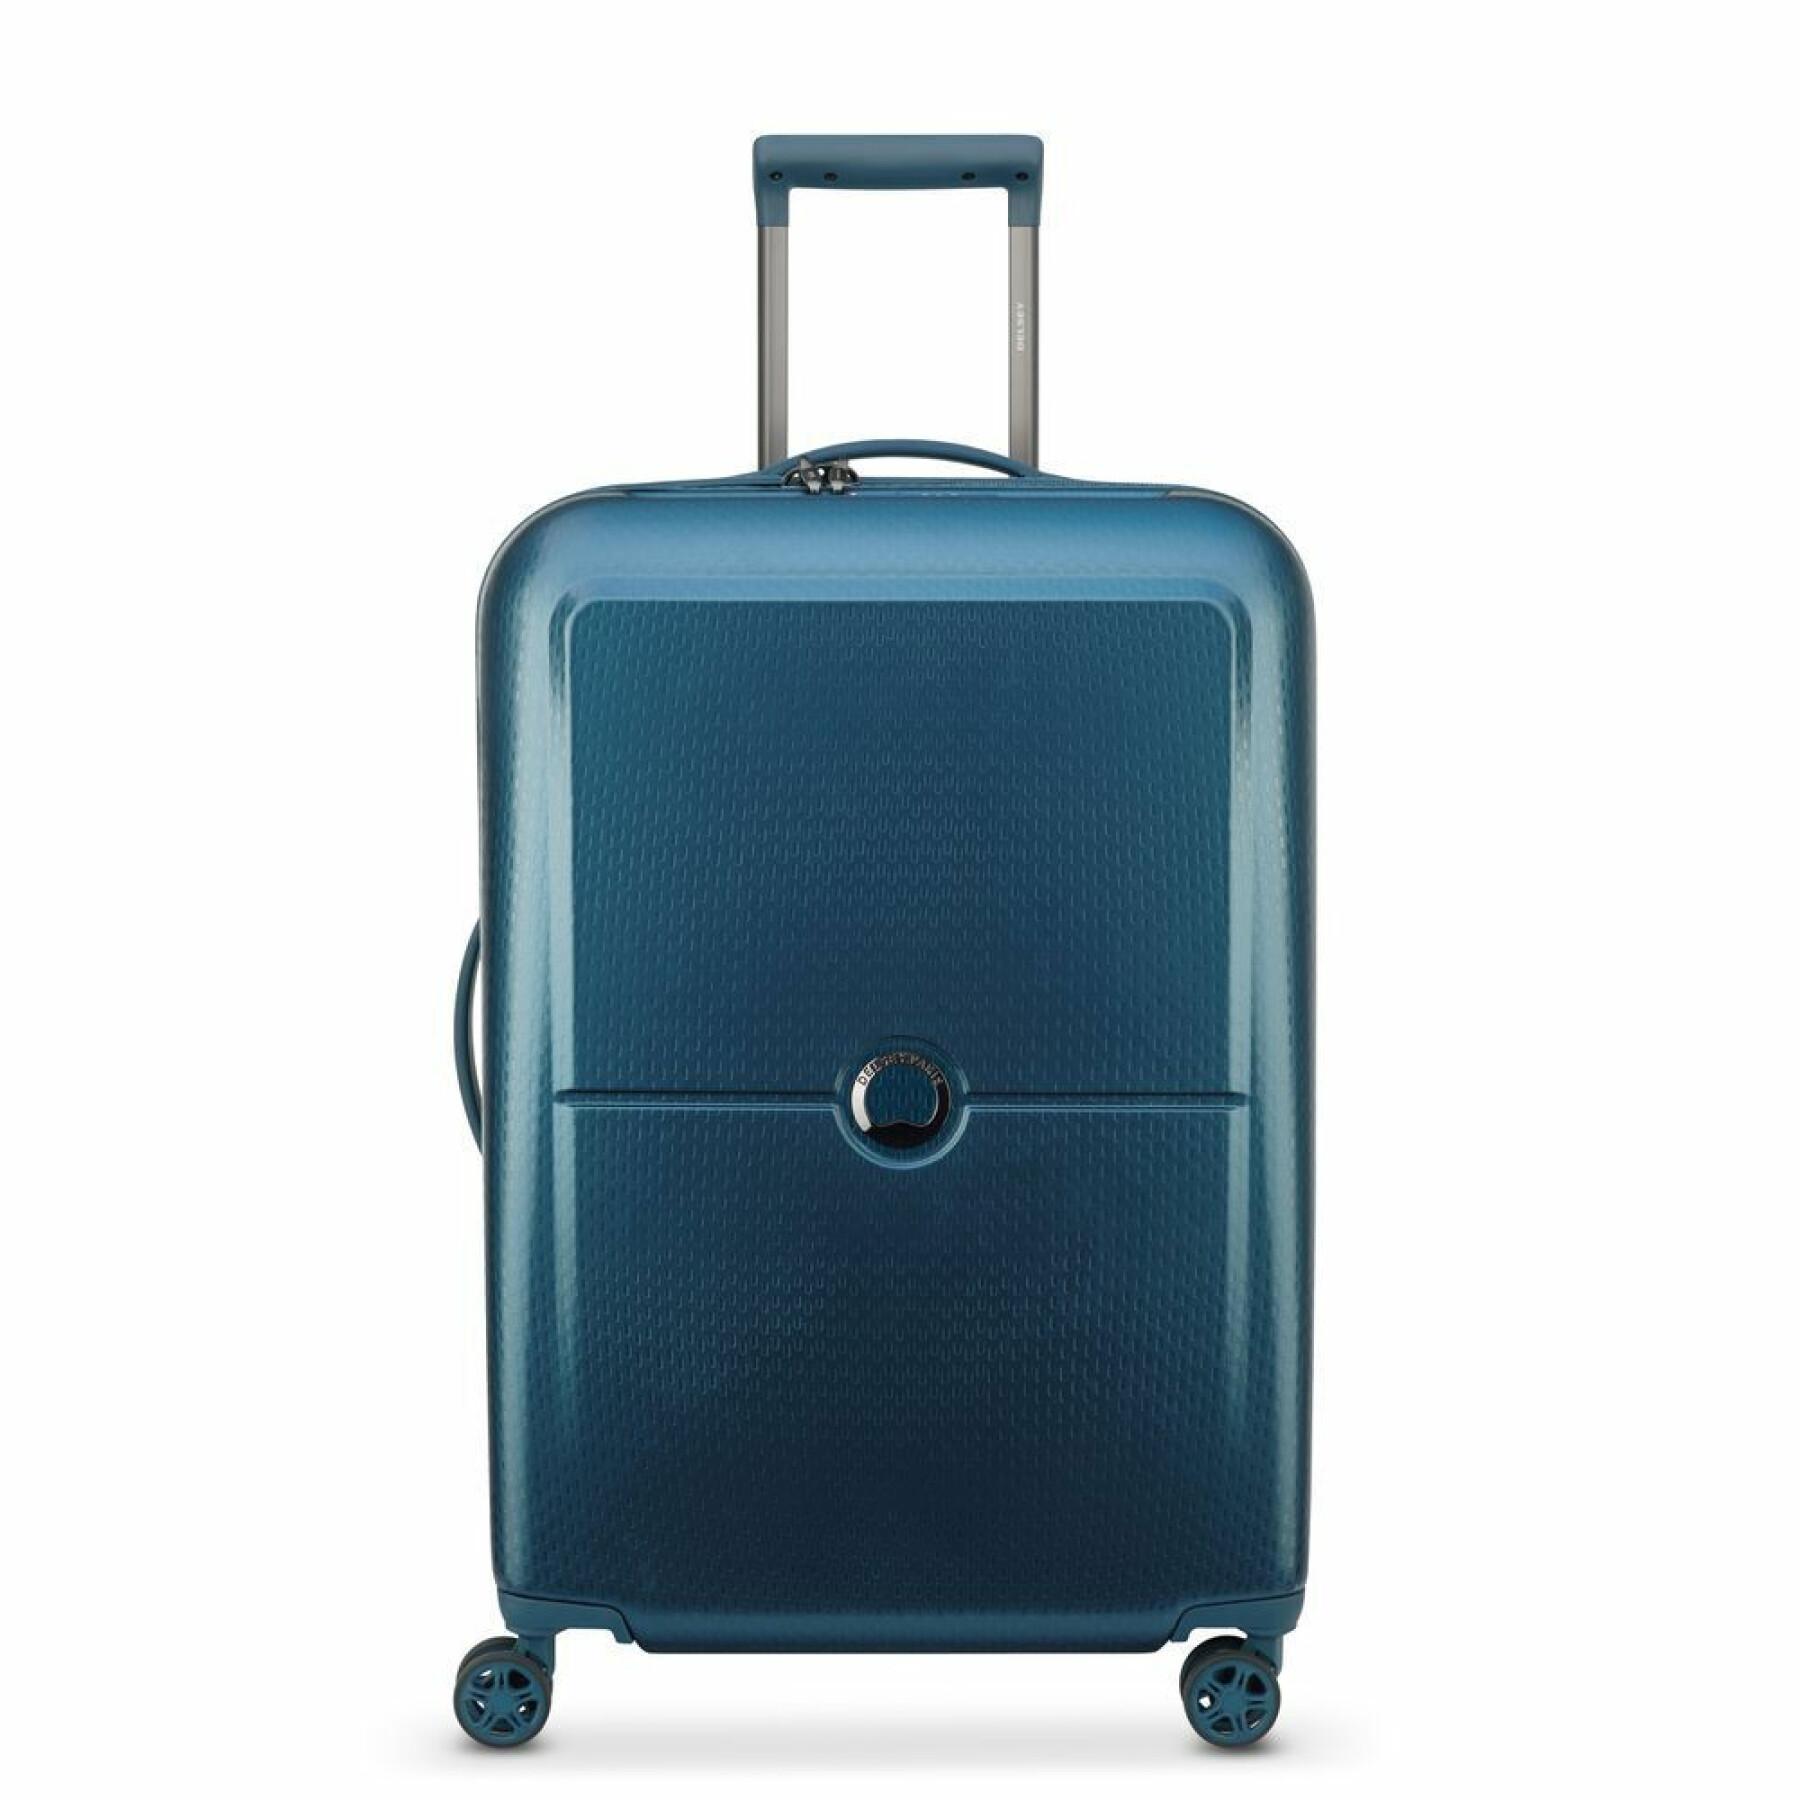 Trolley suitcase 4 double wheels Delsey Turenne 65 cm